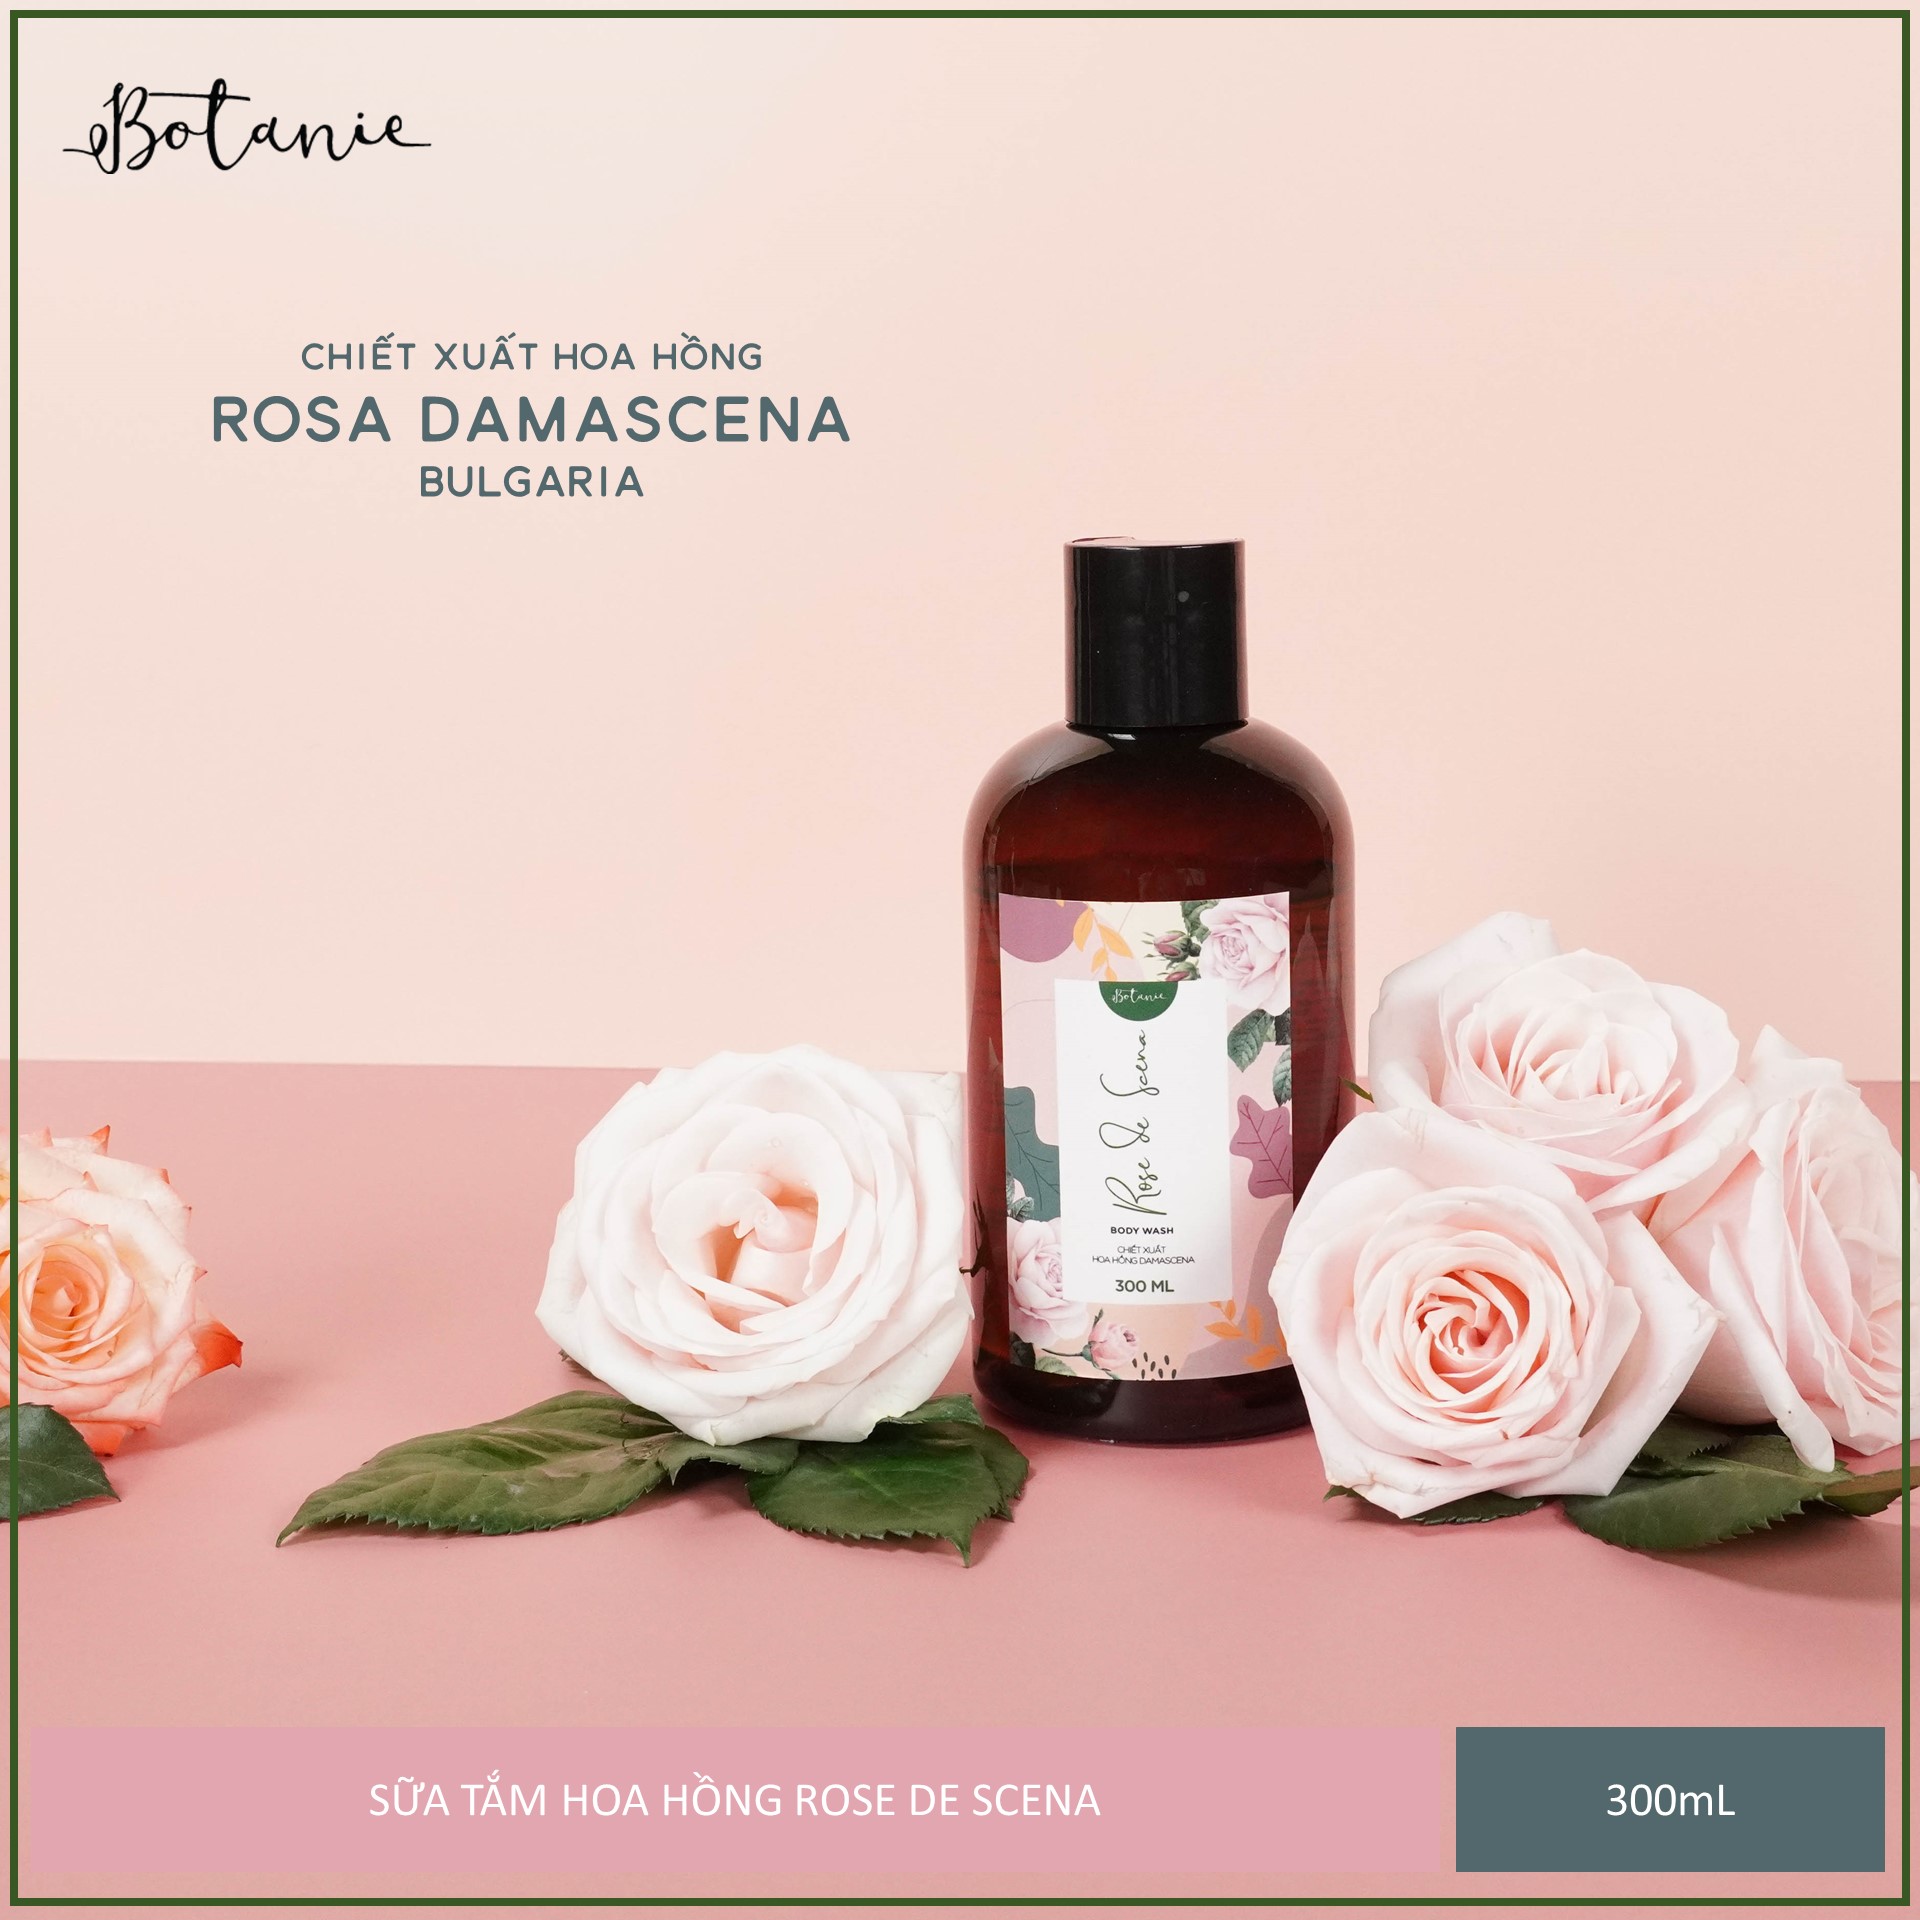 Sữa tắm cao cấp Rose de Scena 300ml - Hoa hồng Damascena - Bulgaria - Dịu nhẹ, dưỡng da mịn màng